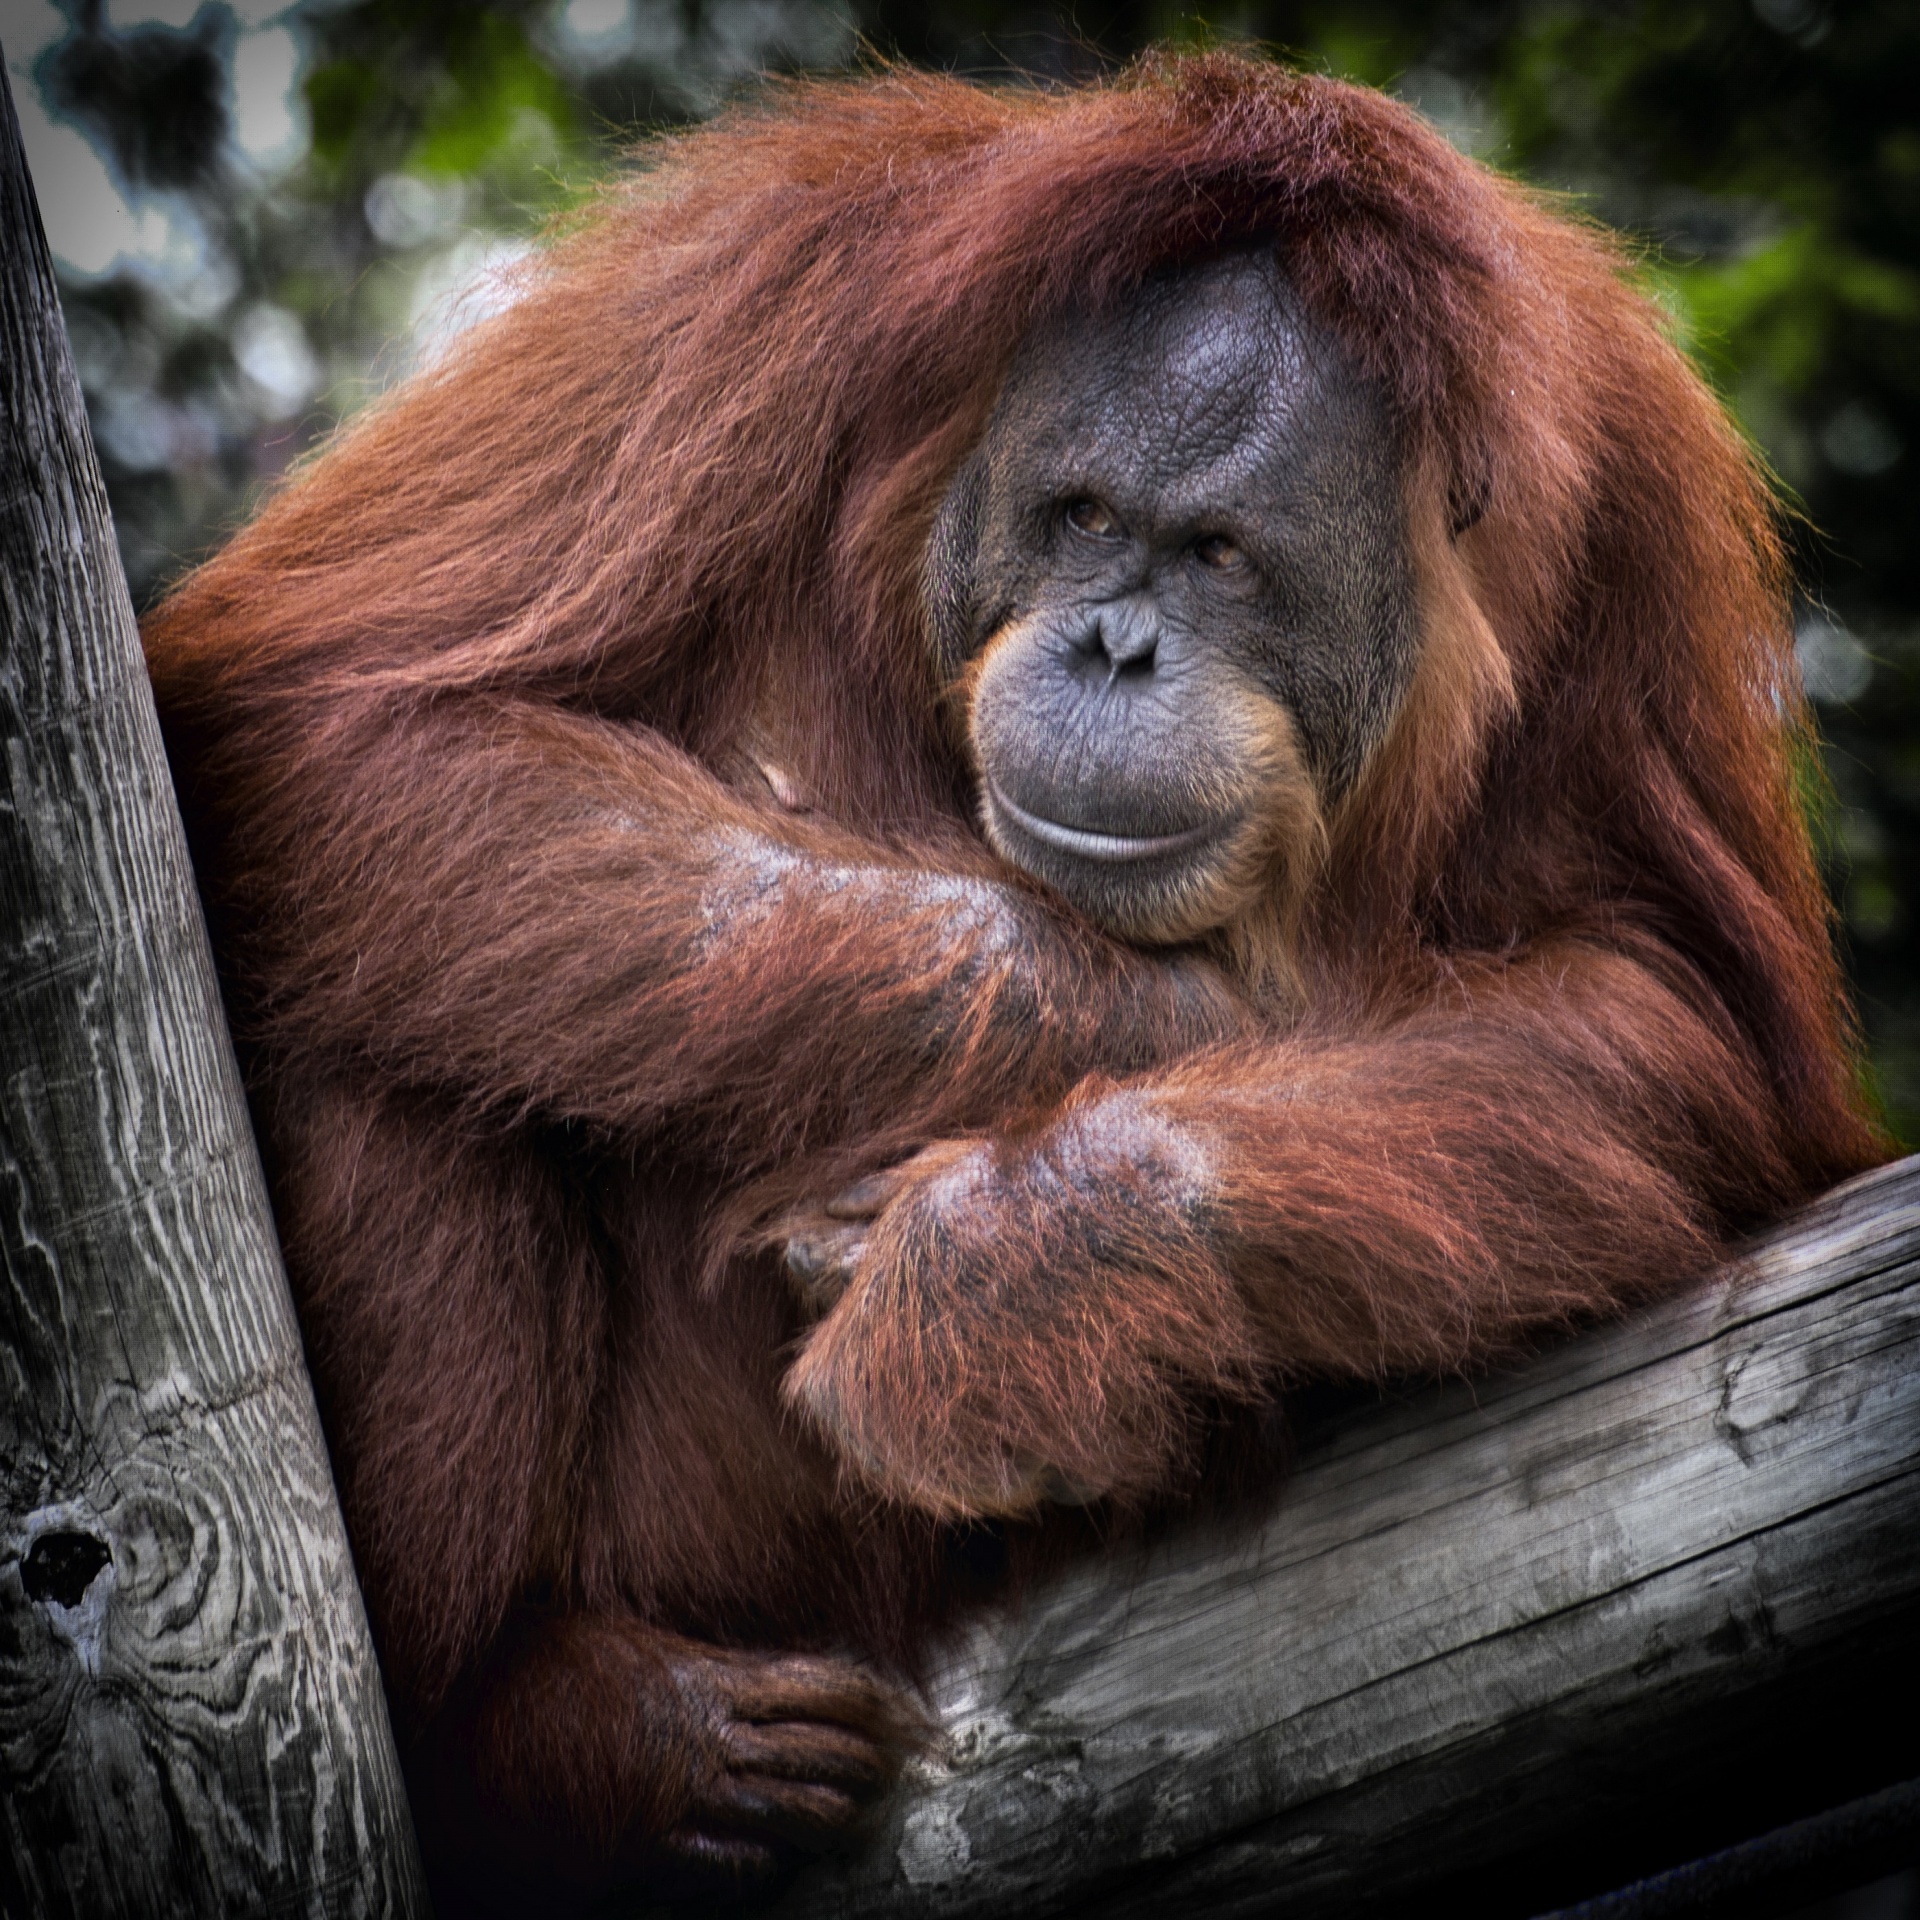 Orangutan Sitting in a Tree